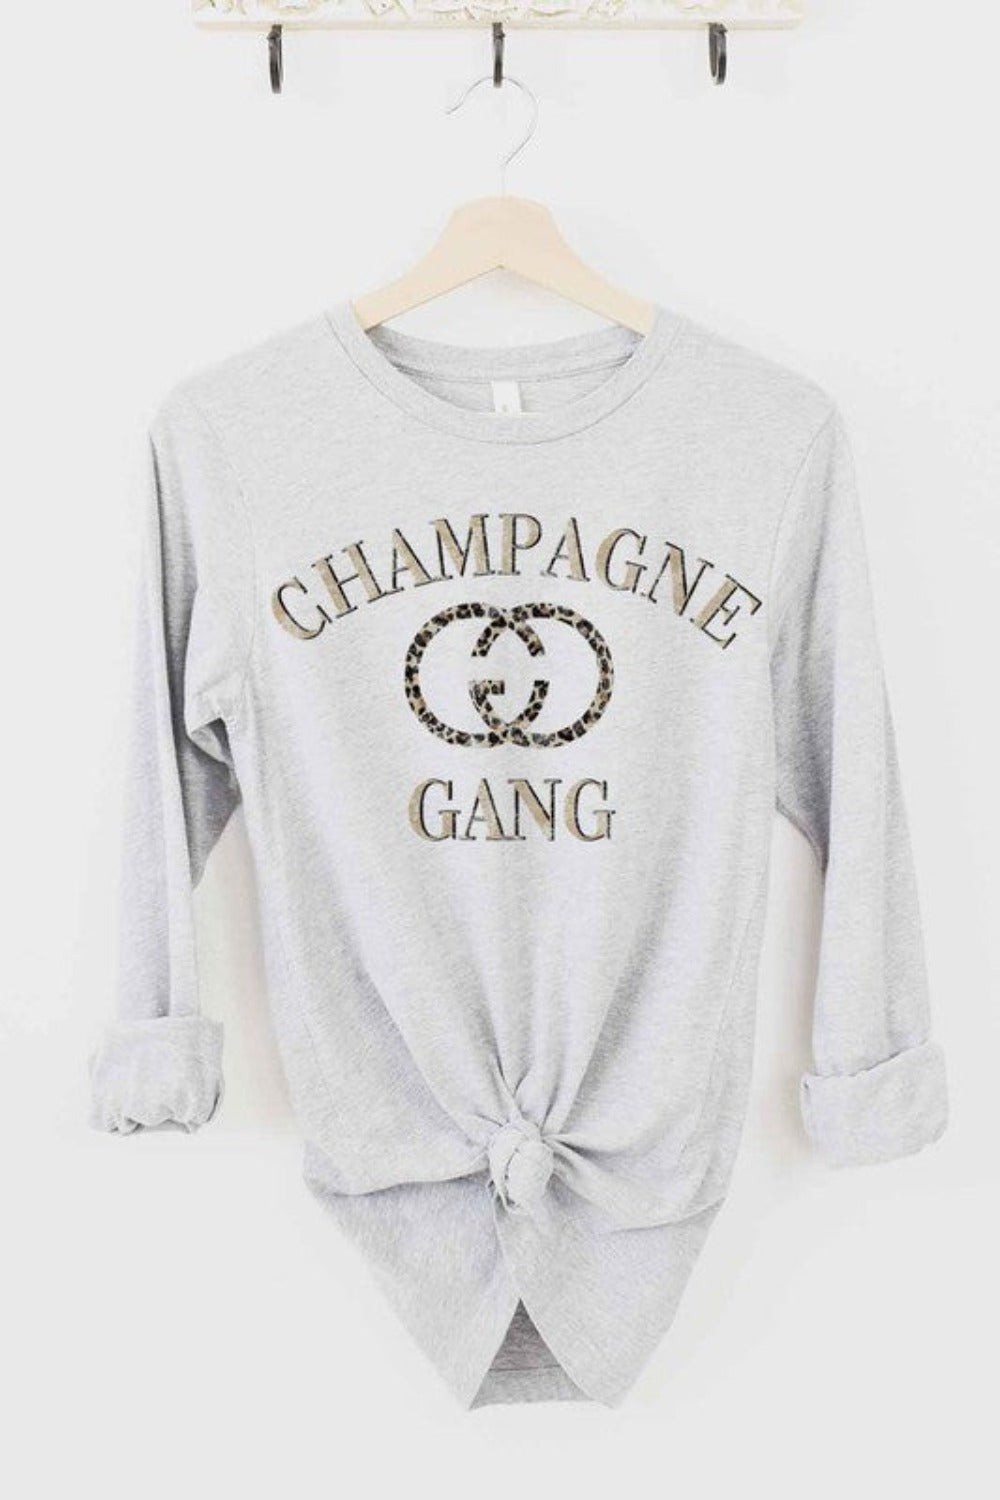 Champagne Gang is Here Long Sleeve Tee